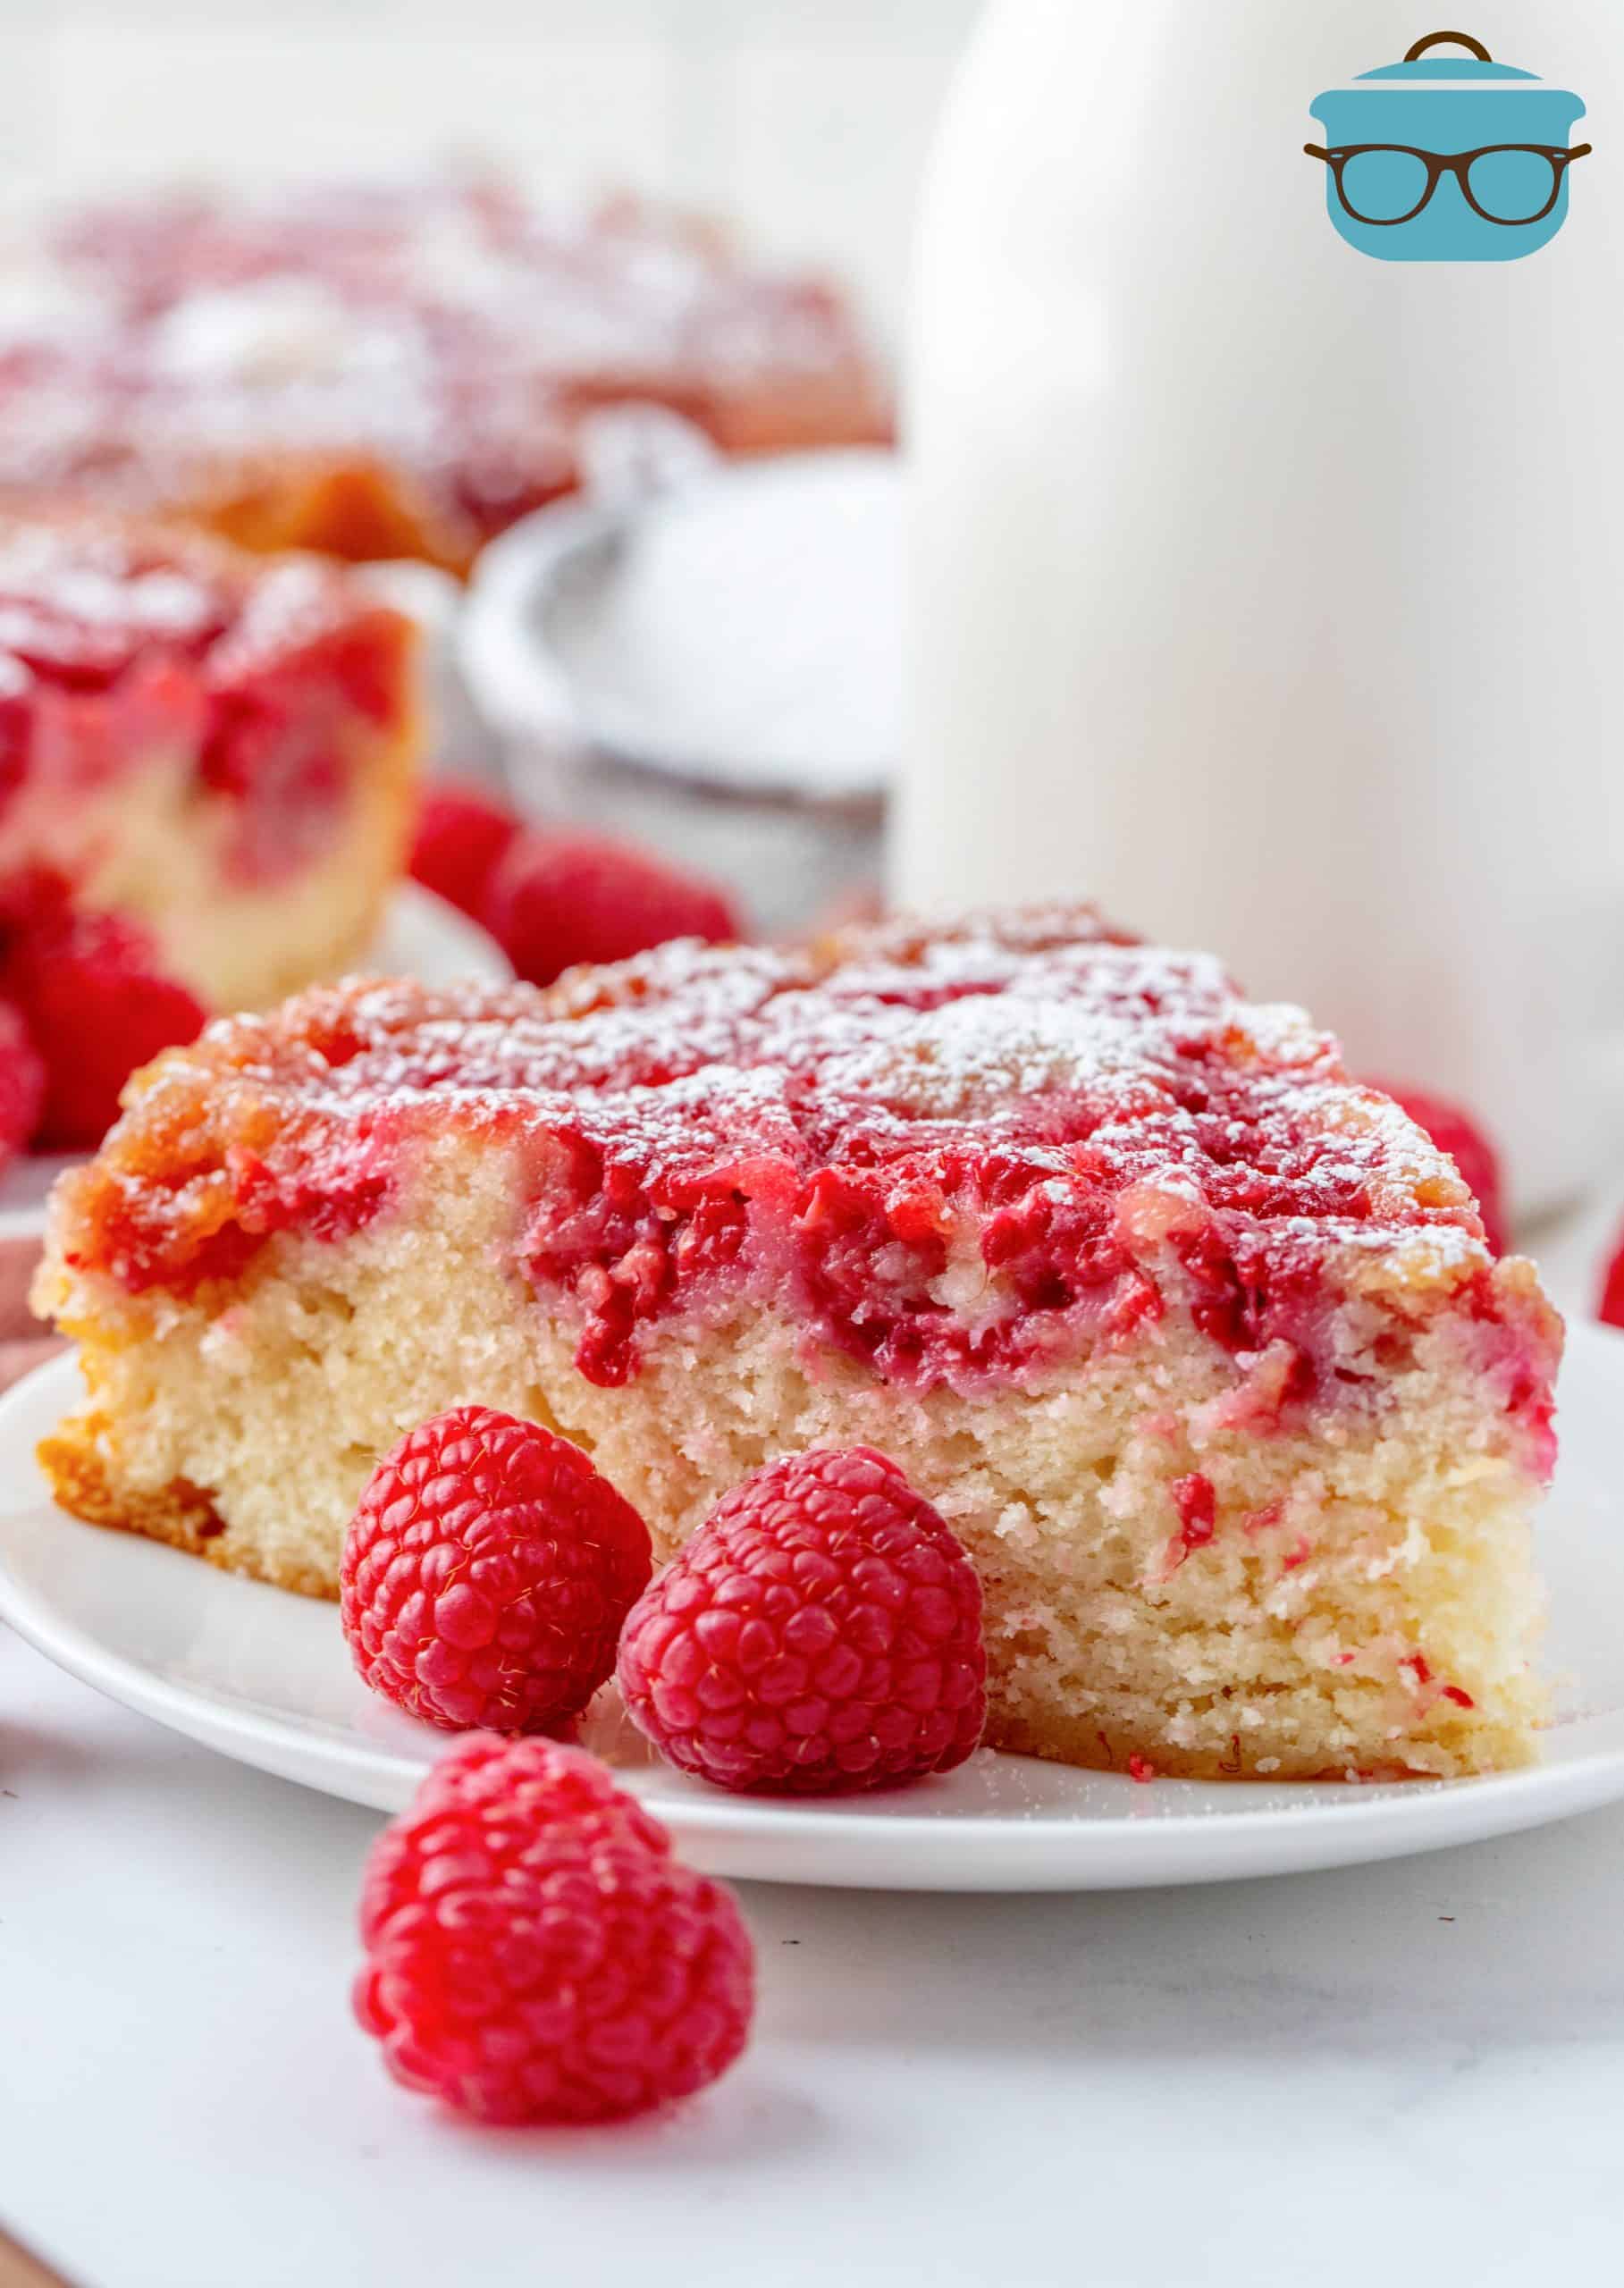 Slice of Raspberry Upside Down Cake on white plate with raspberries